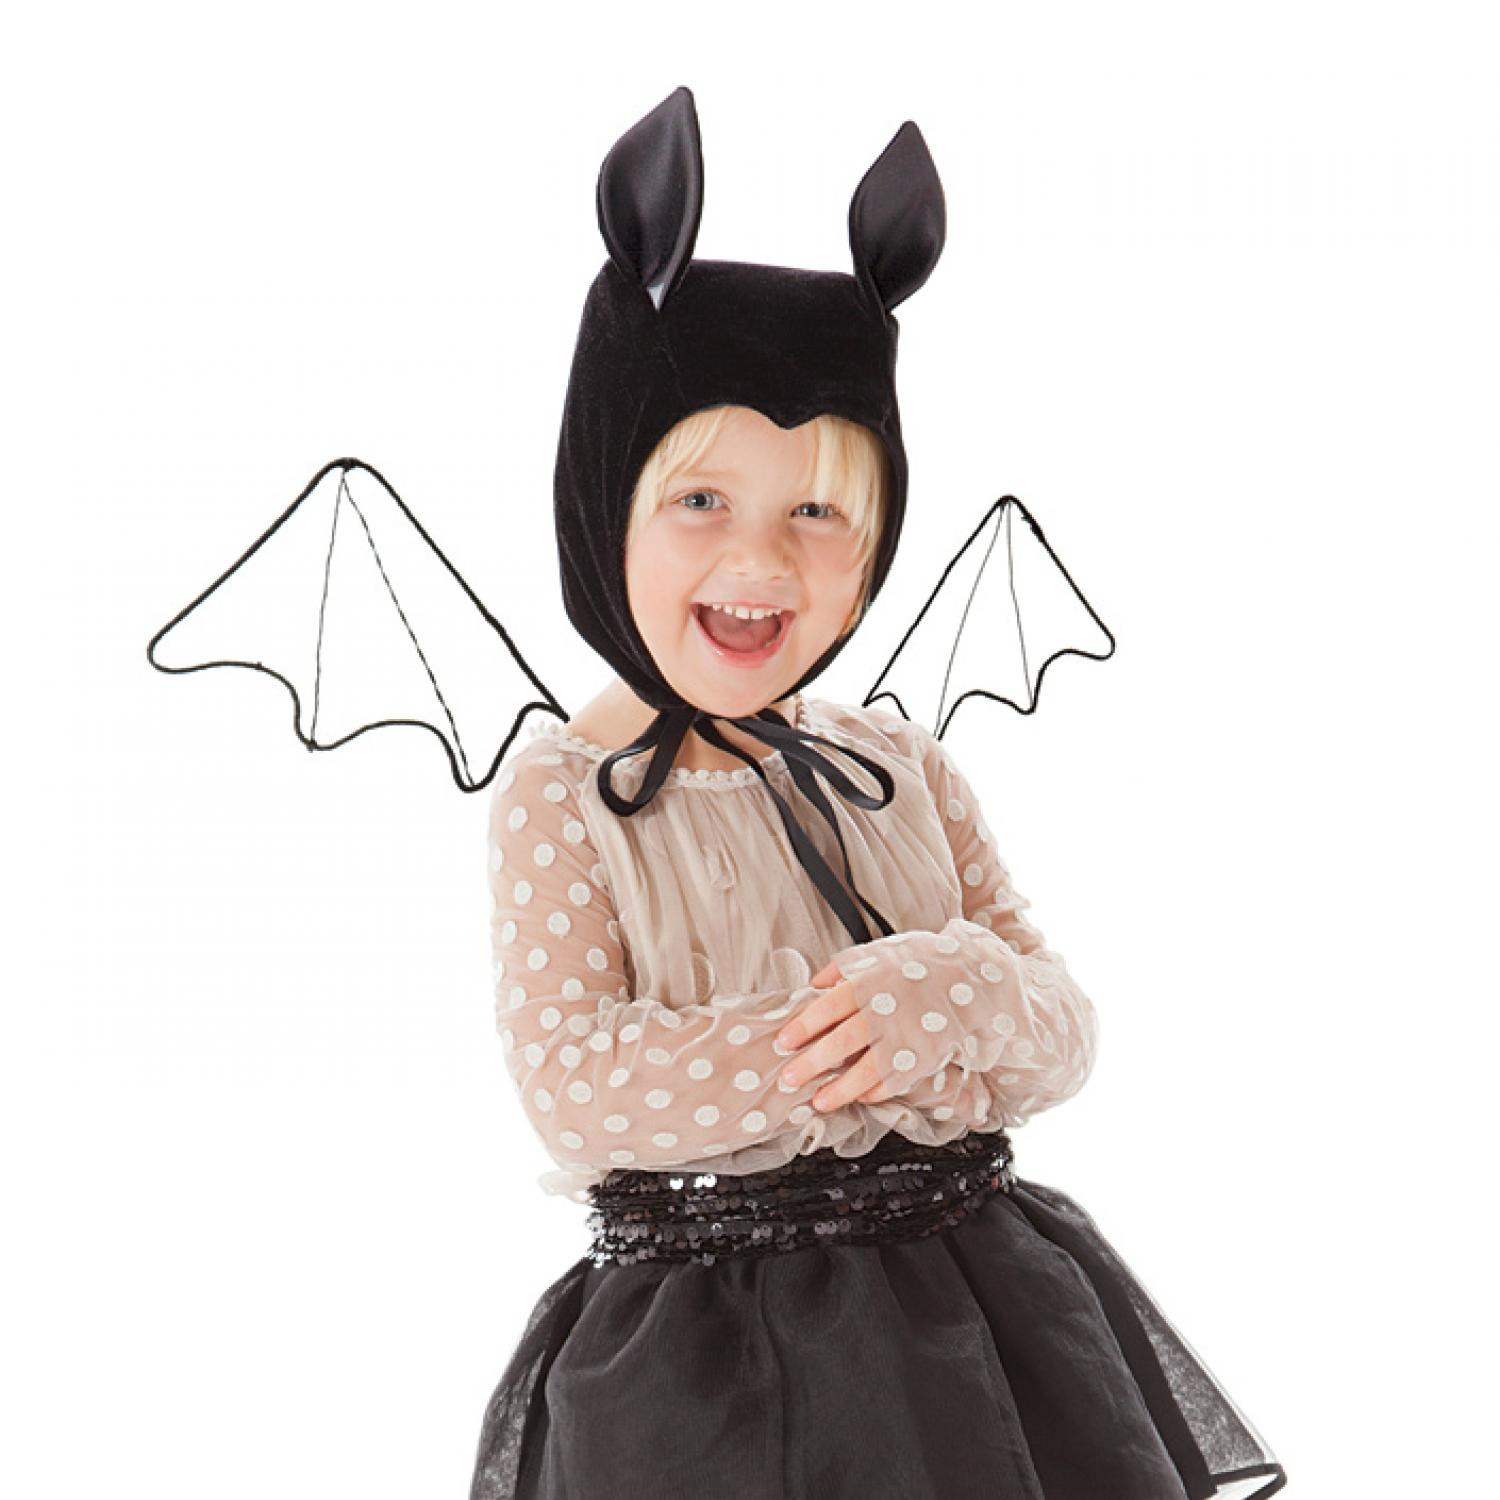 DIY Halloween Costume For Toddlers
 DIY Kids Halloween Costumes